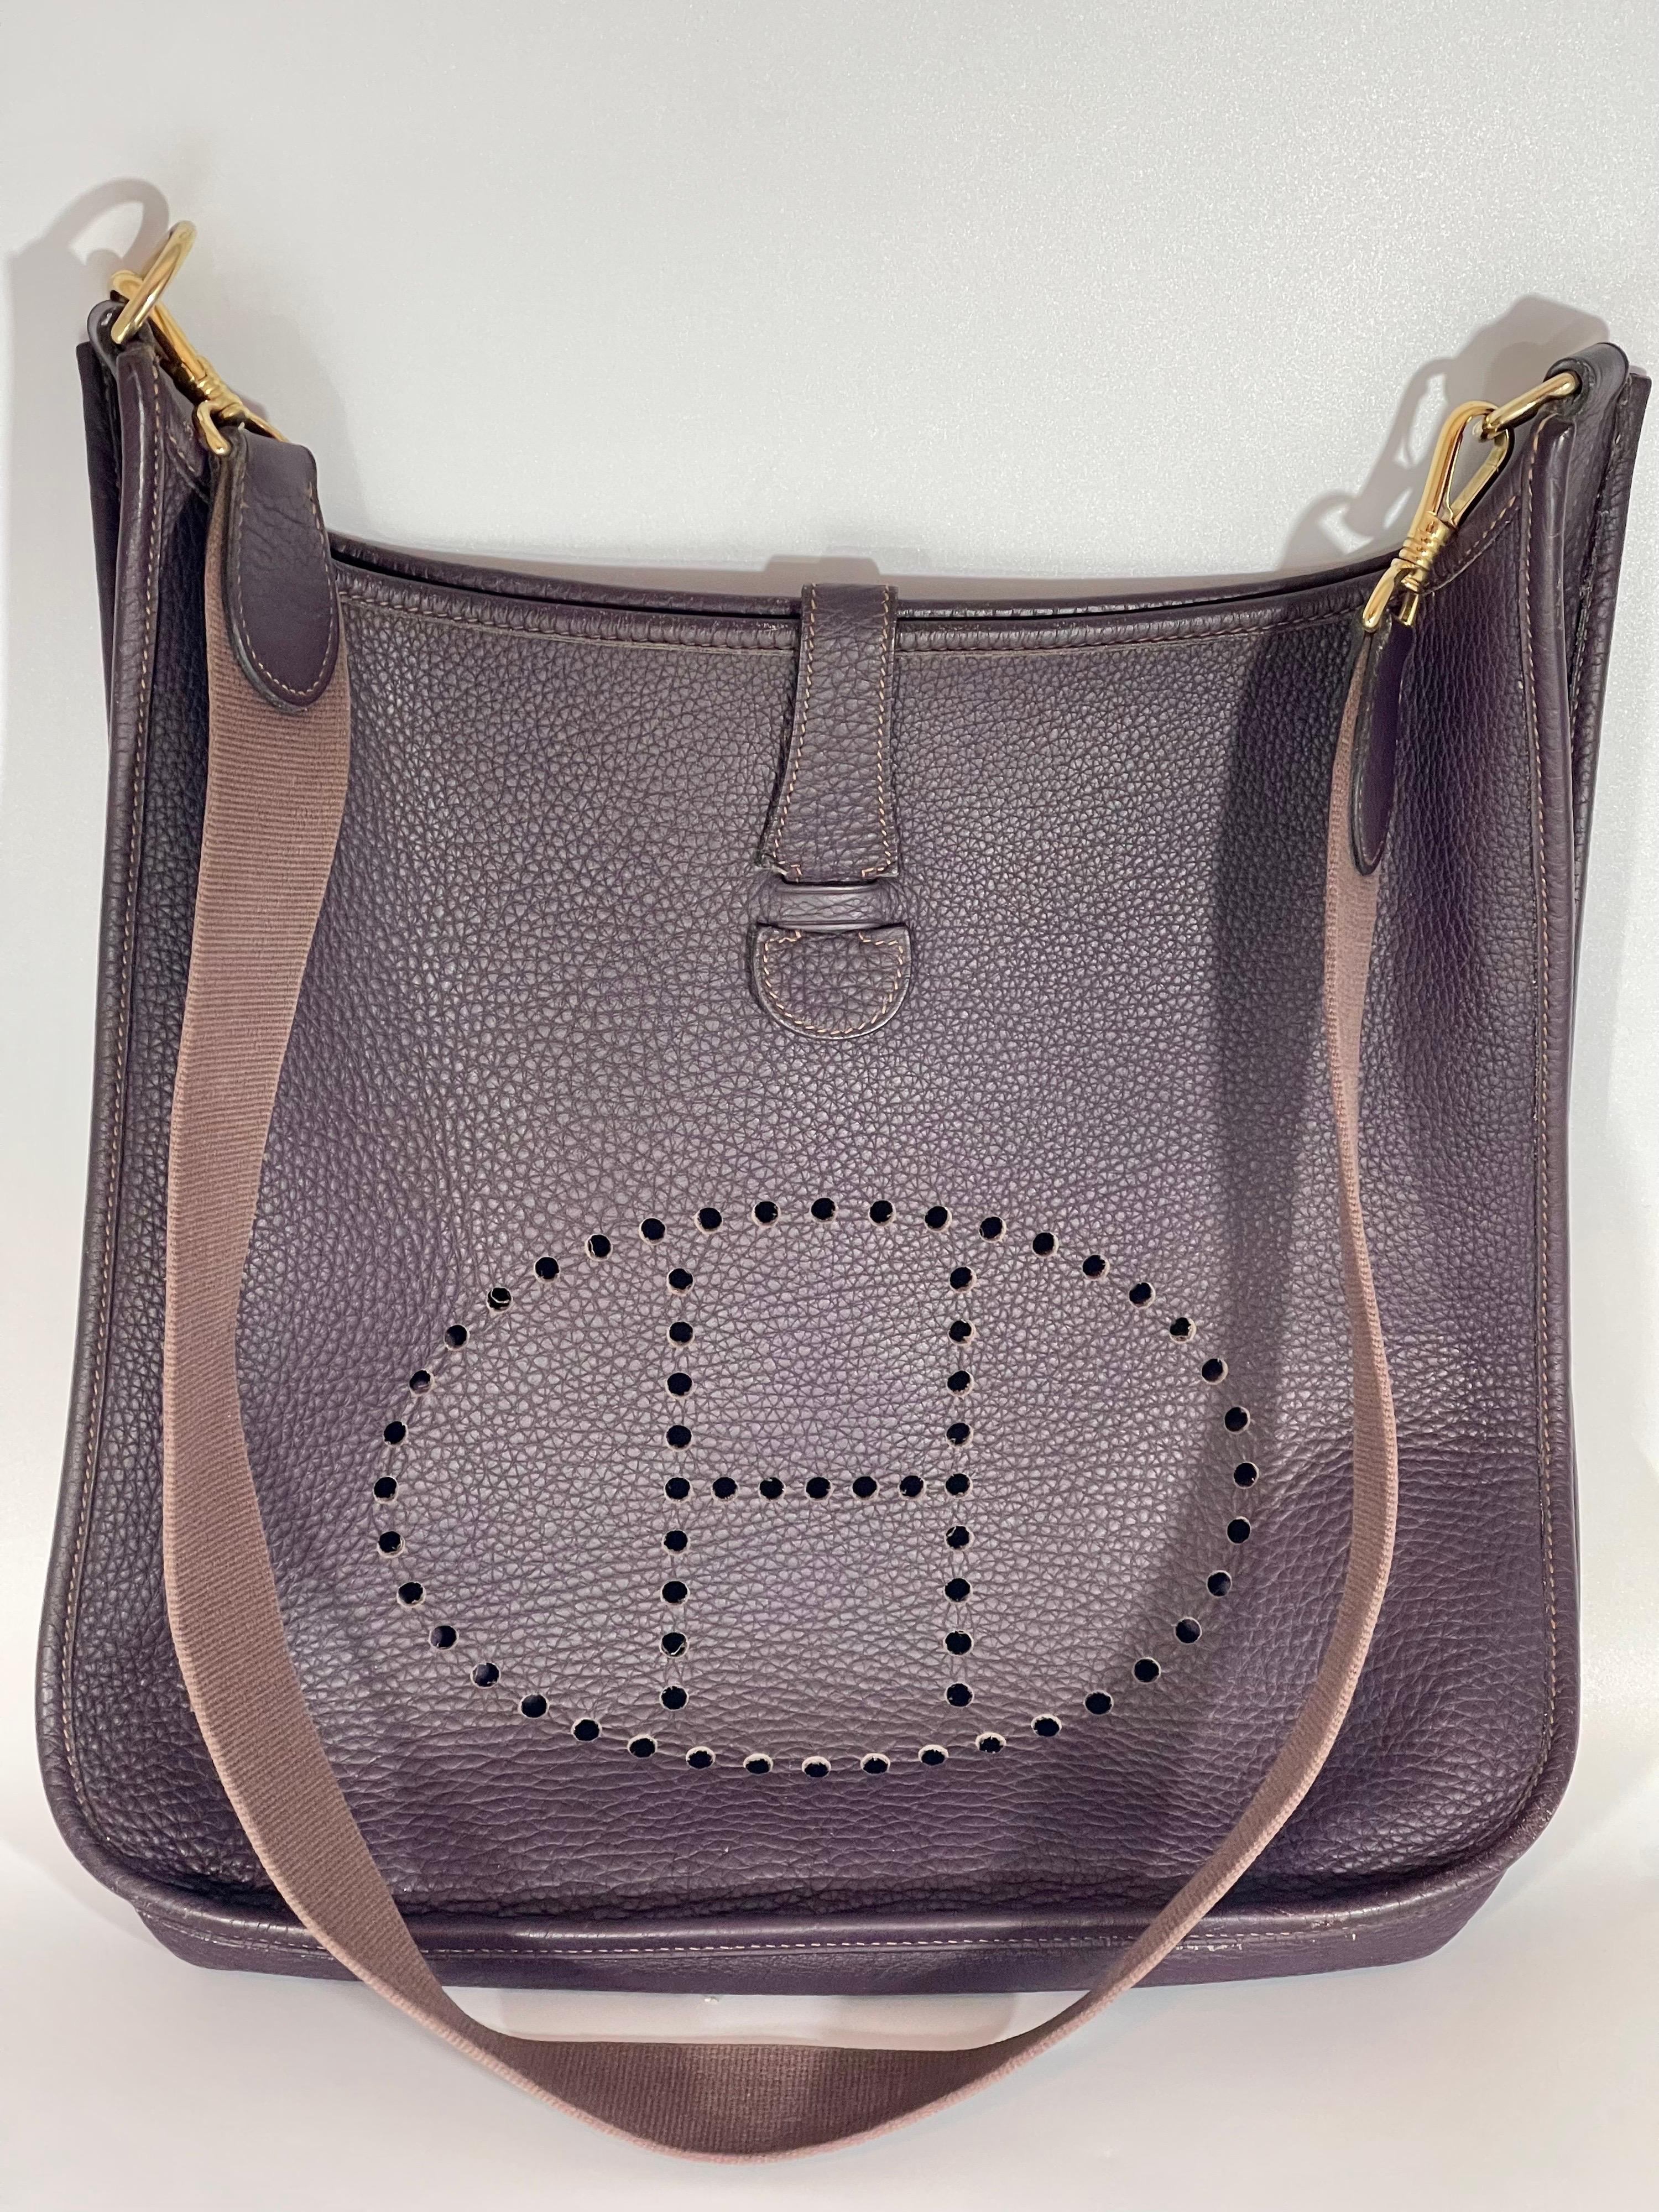 Hermès Evelyne Pm Dunkelbraun / Schokolade Leder Cross Body Bag wie neu im Angebot 7